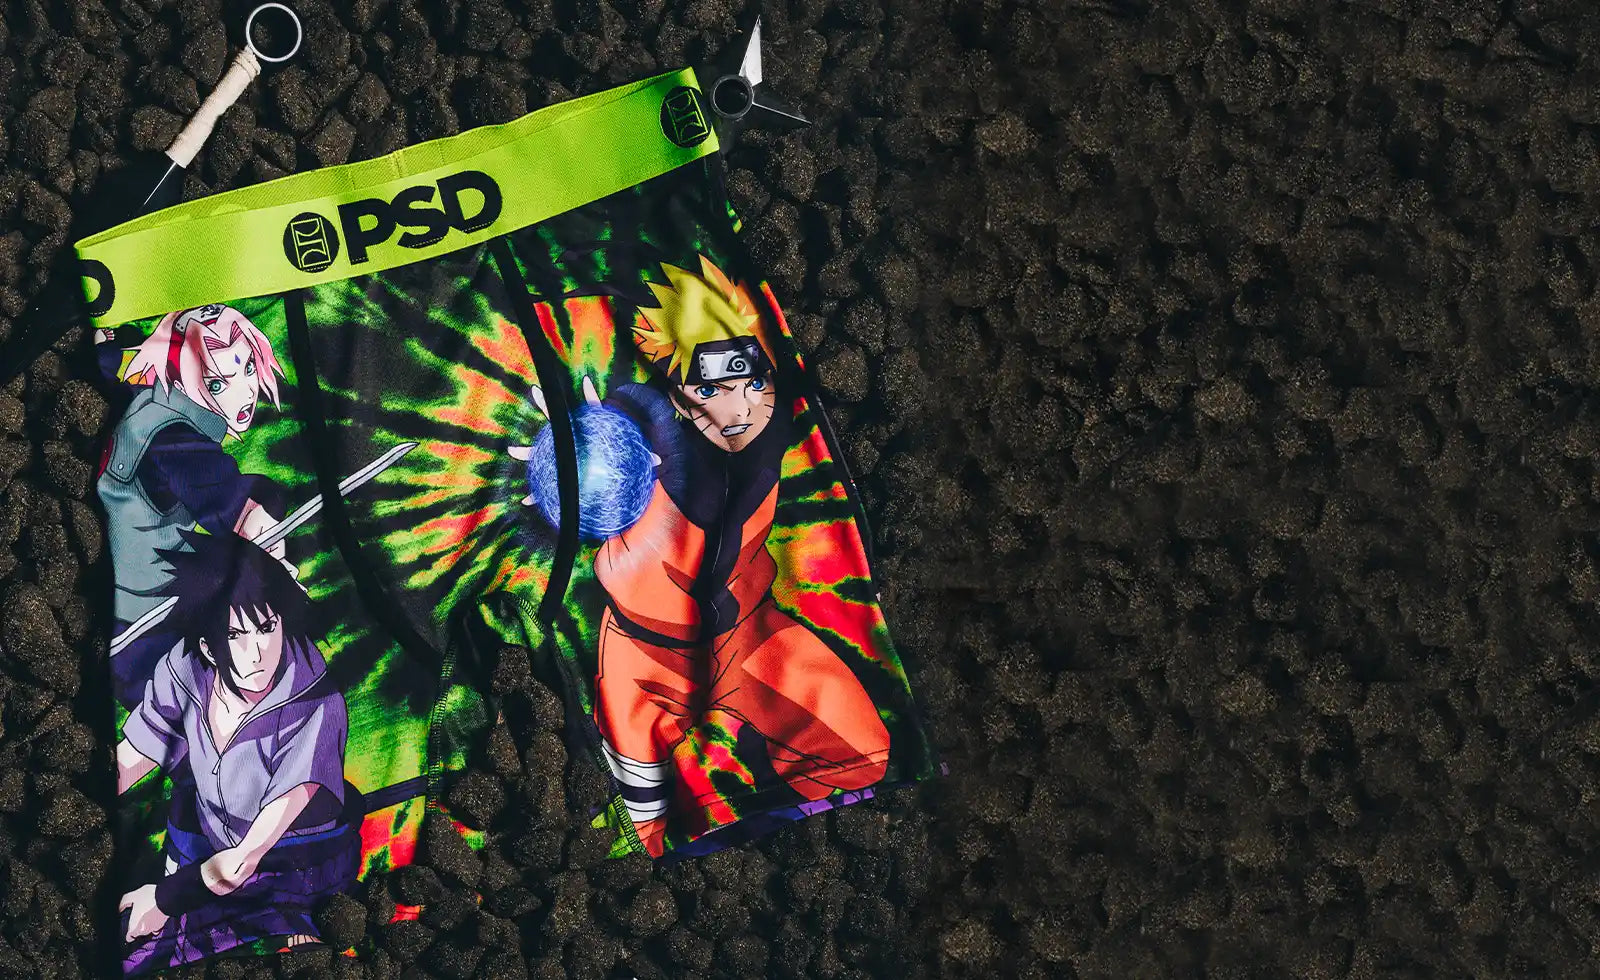 Naruto Sketch Tie-Dye Boy Shorts Underwear